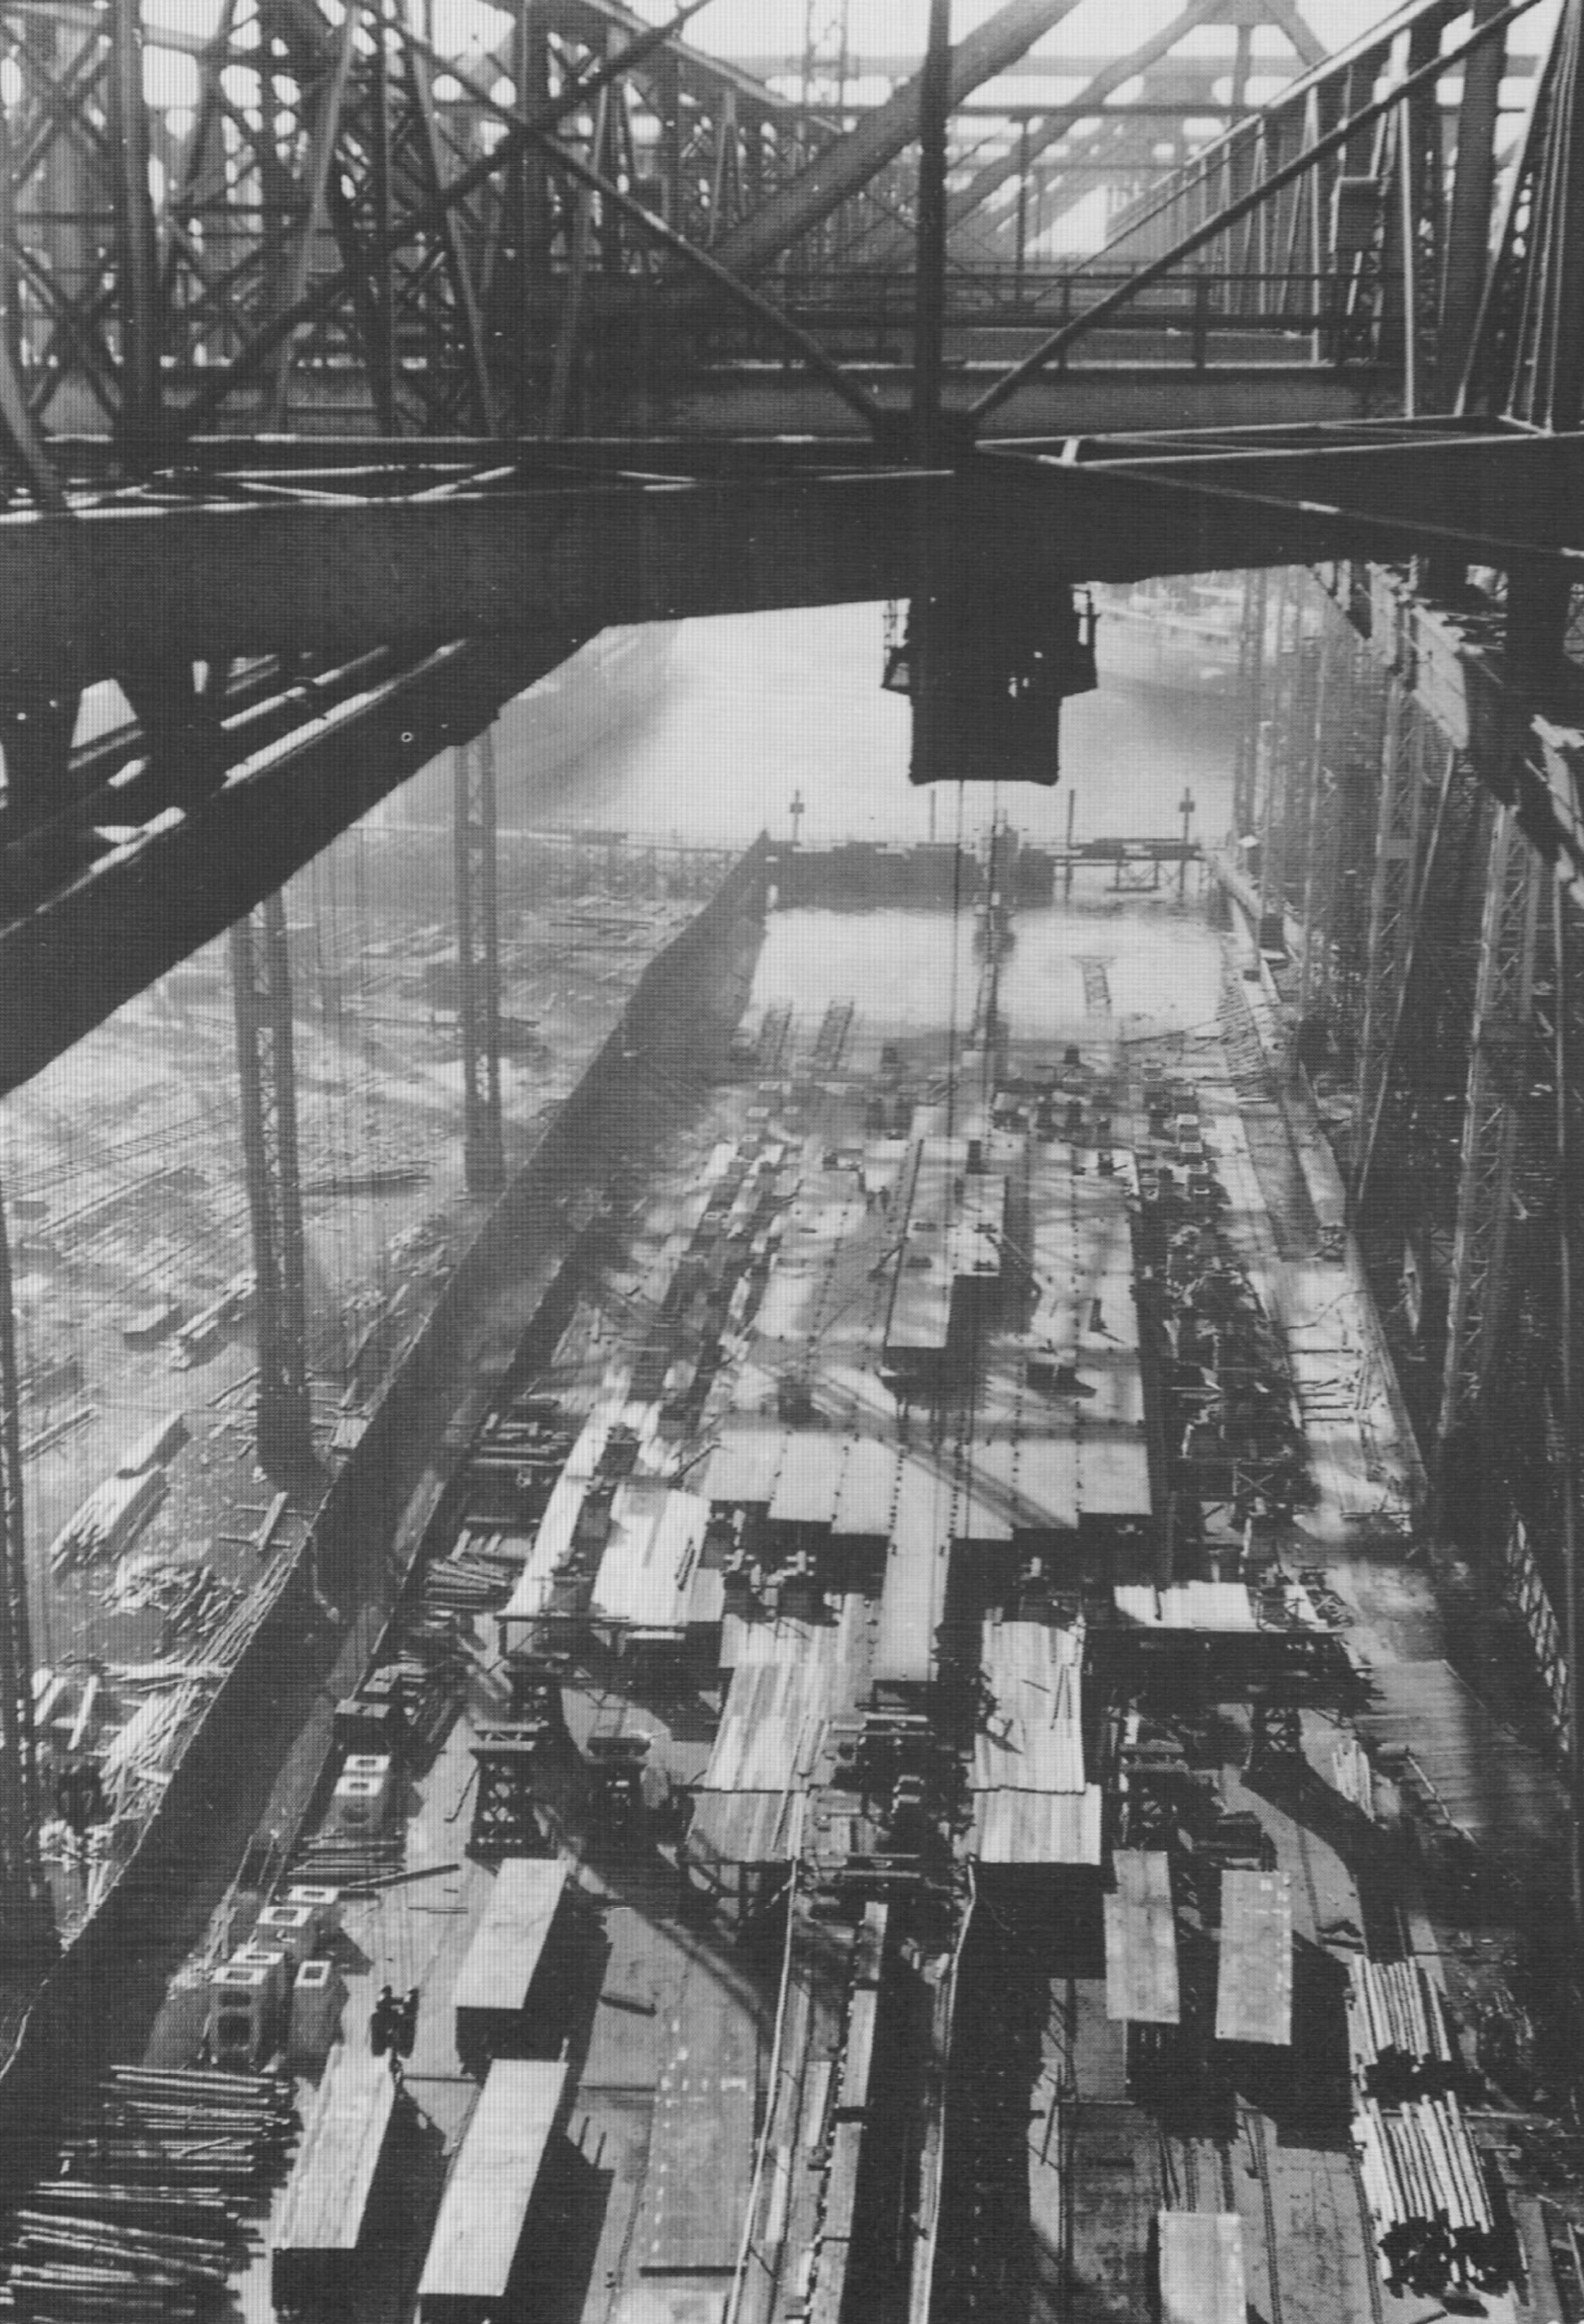 A ship under construction at Vulcan/Howaldtswerke shipyard, Hamburg, Germany, date unknown